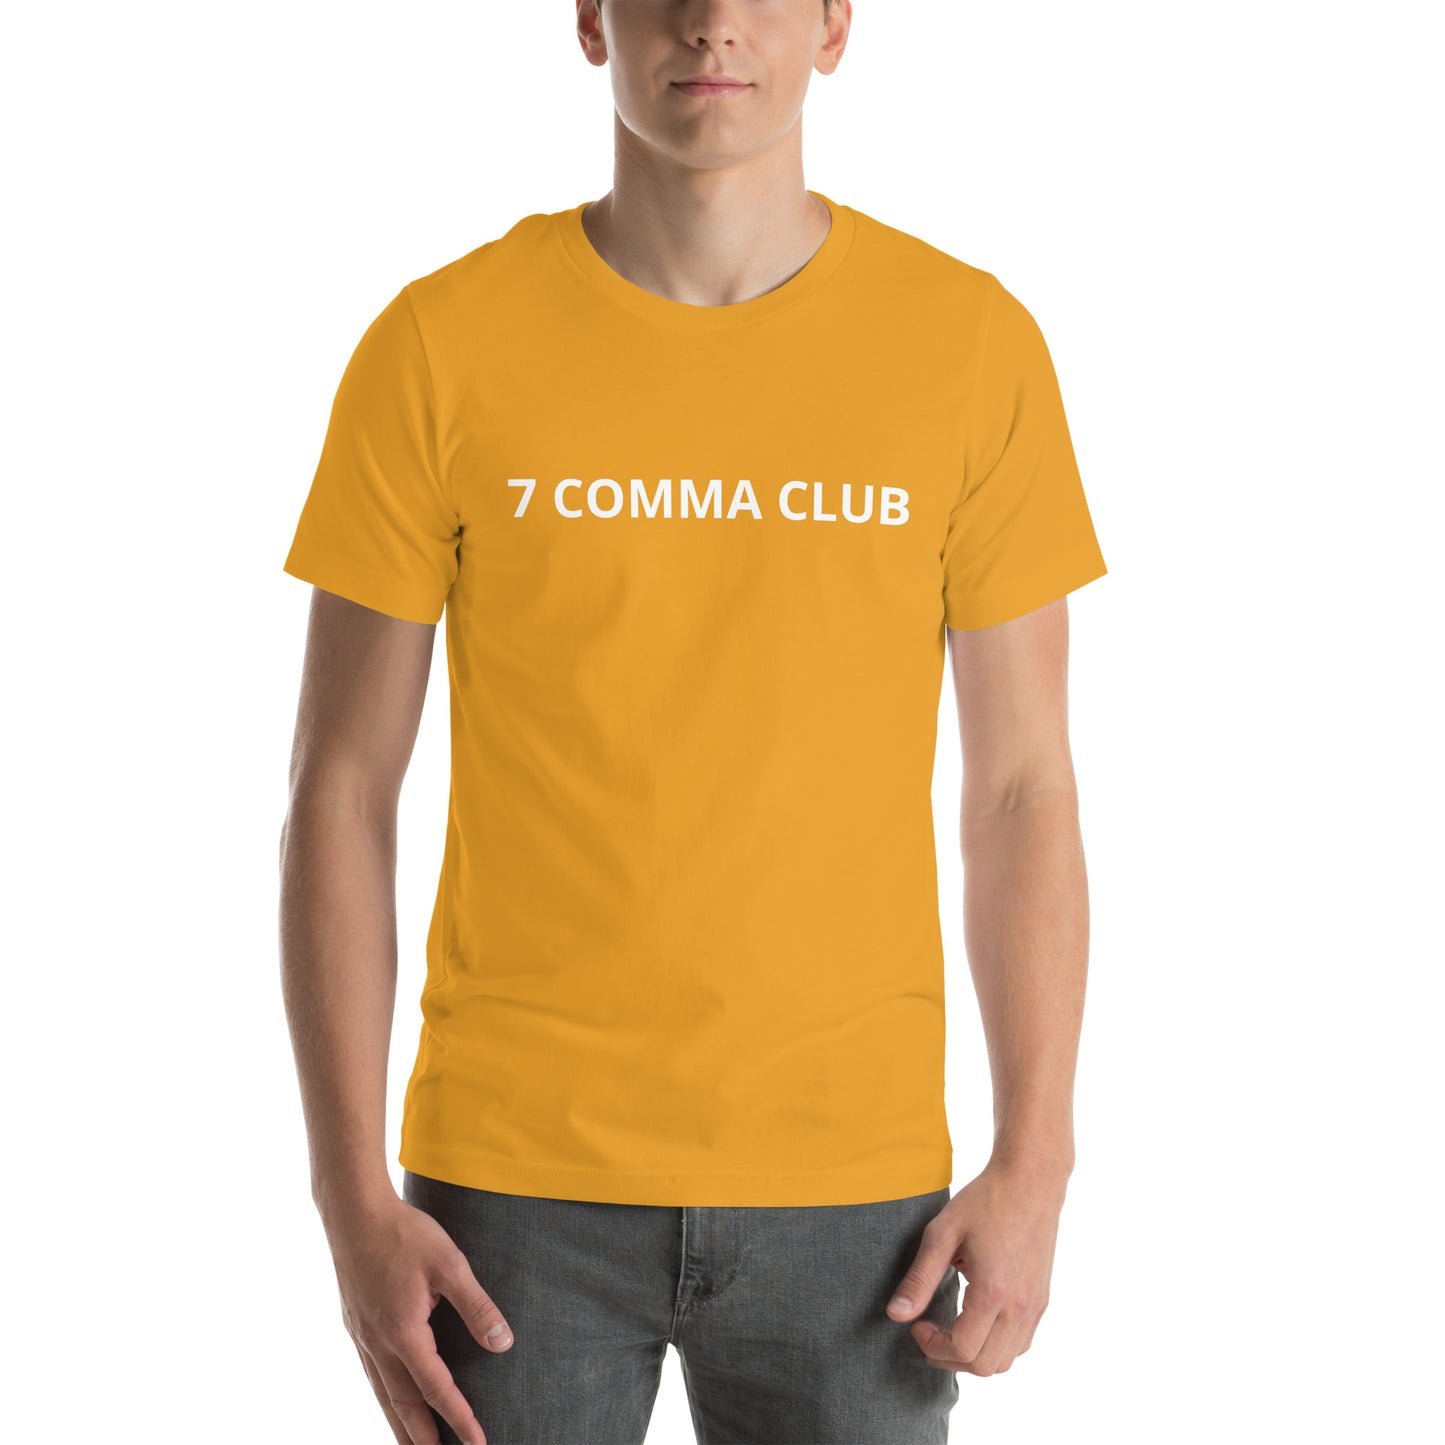 7 COMMA CLUB  Unisex t-shirt